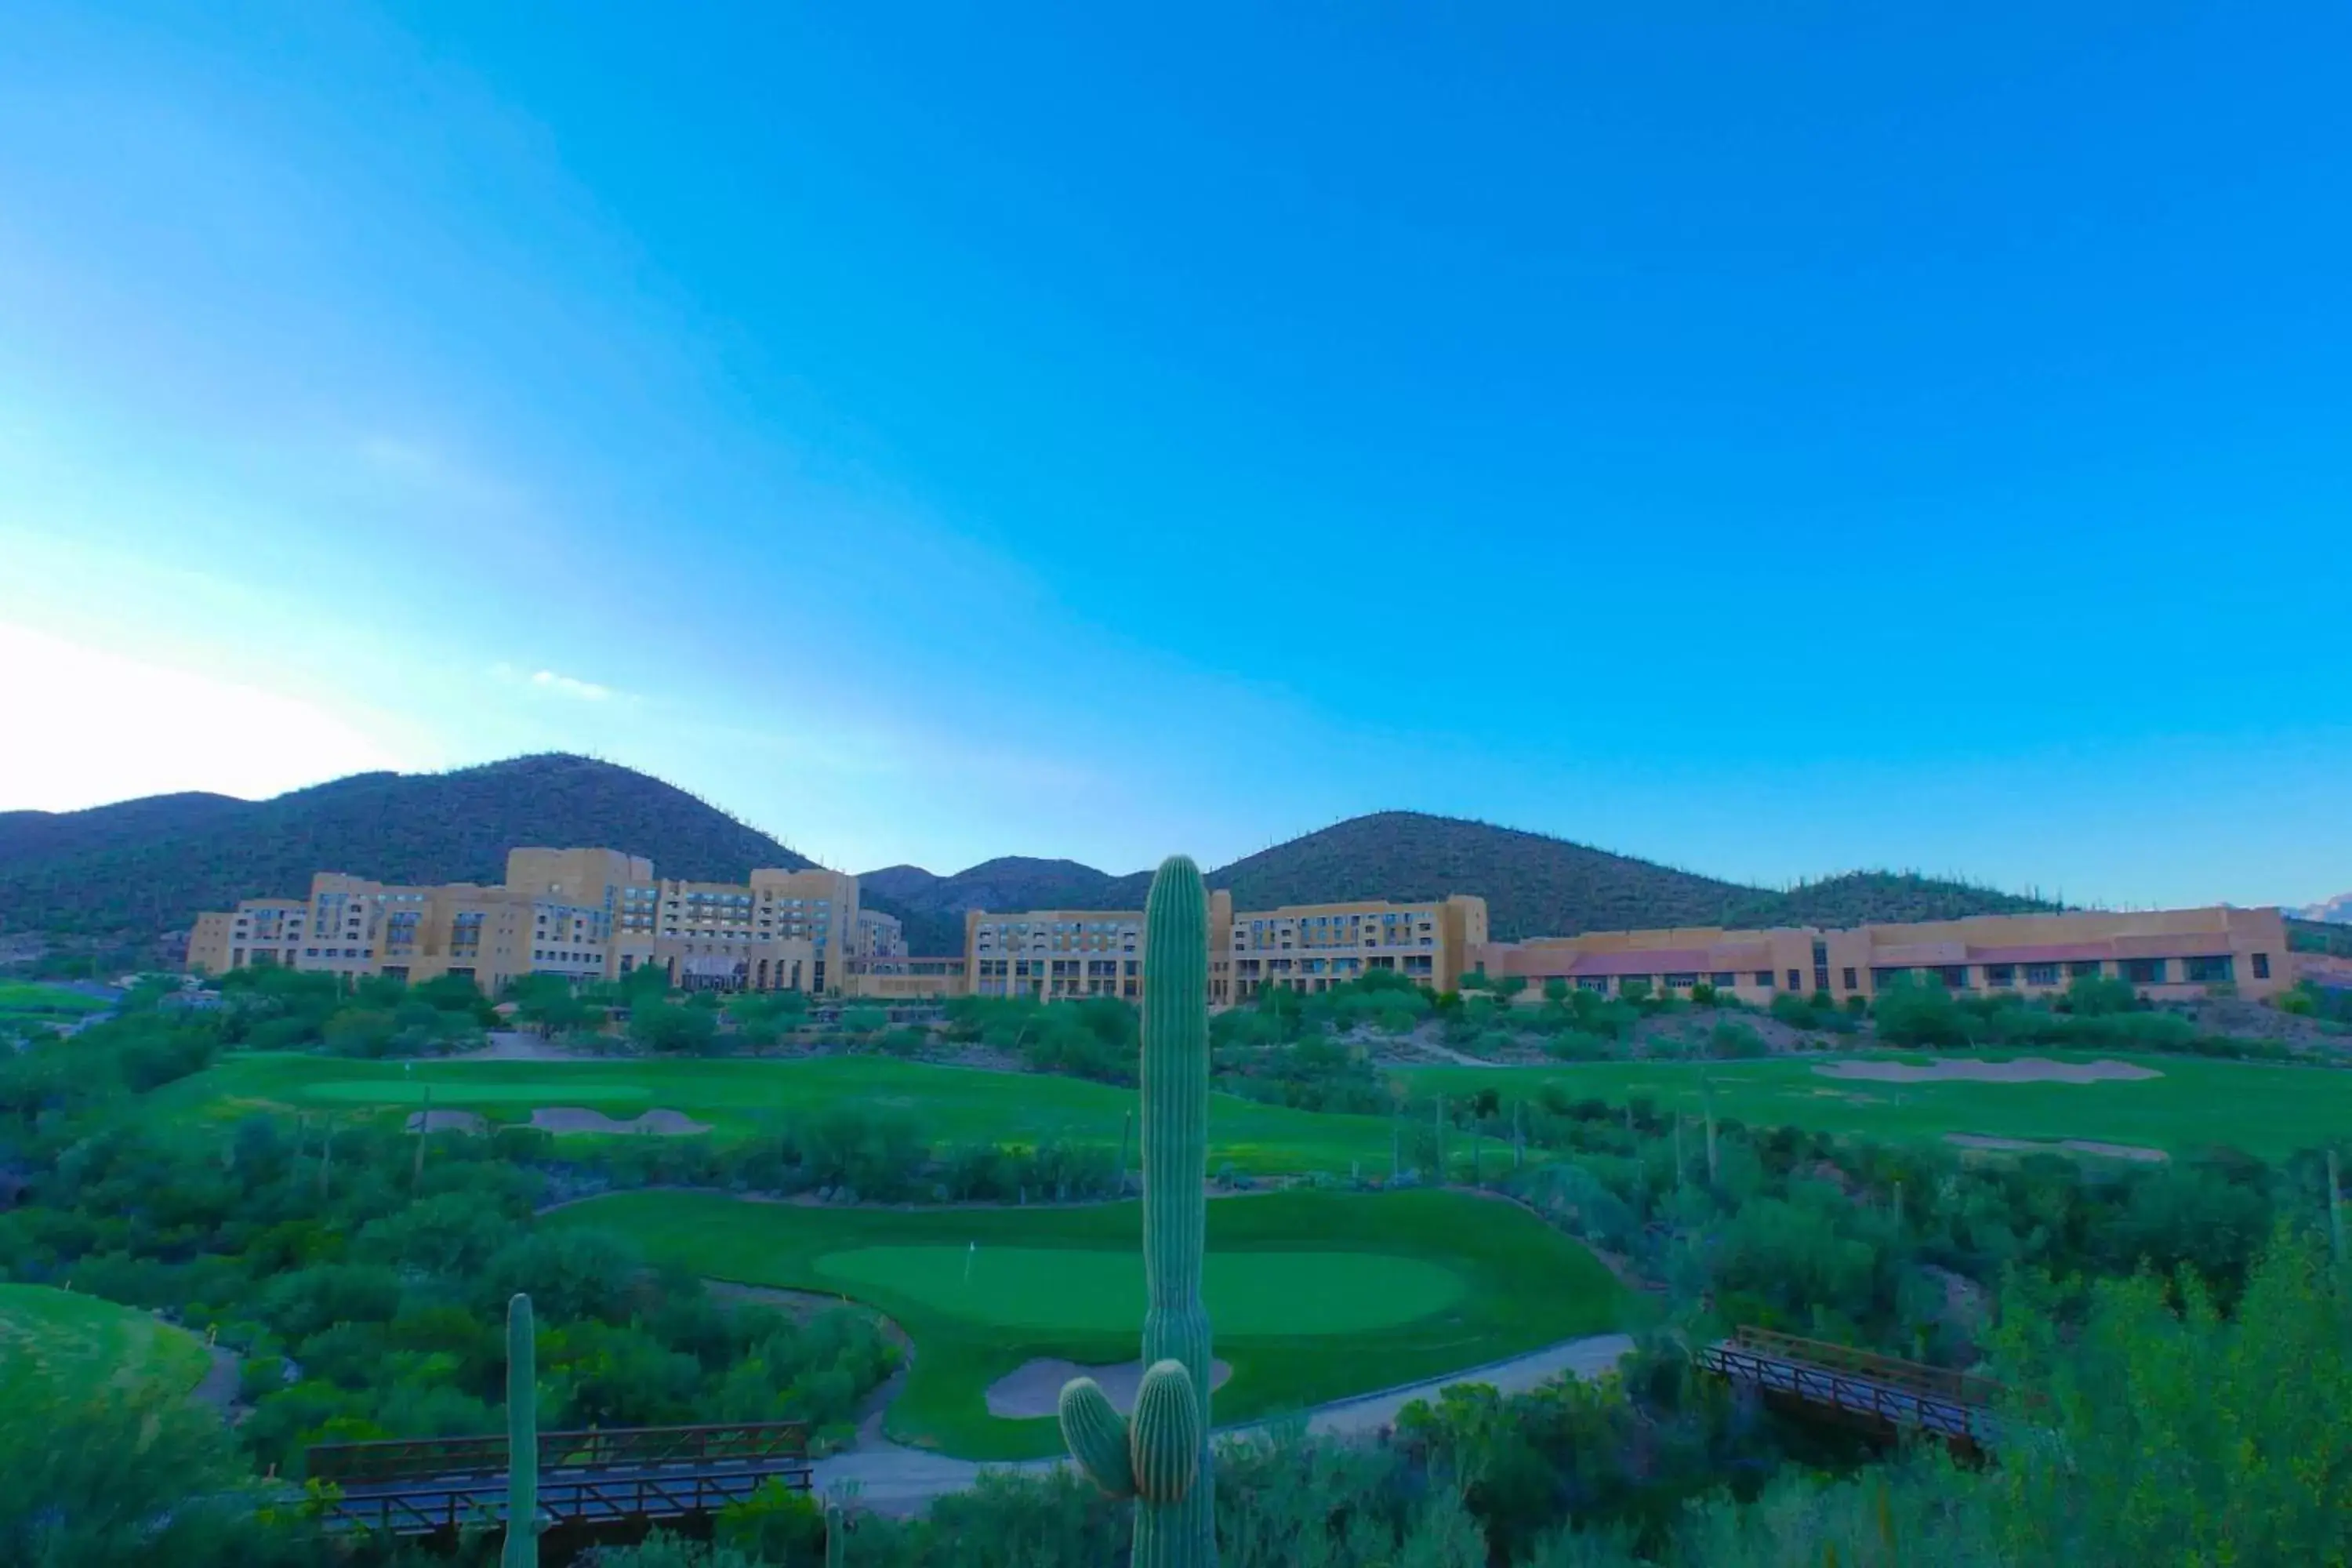 Golfcourse in JW Marriott Tucson Starr Pass Resort